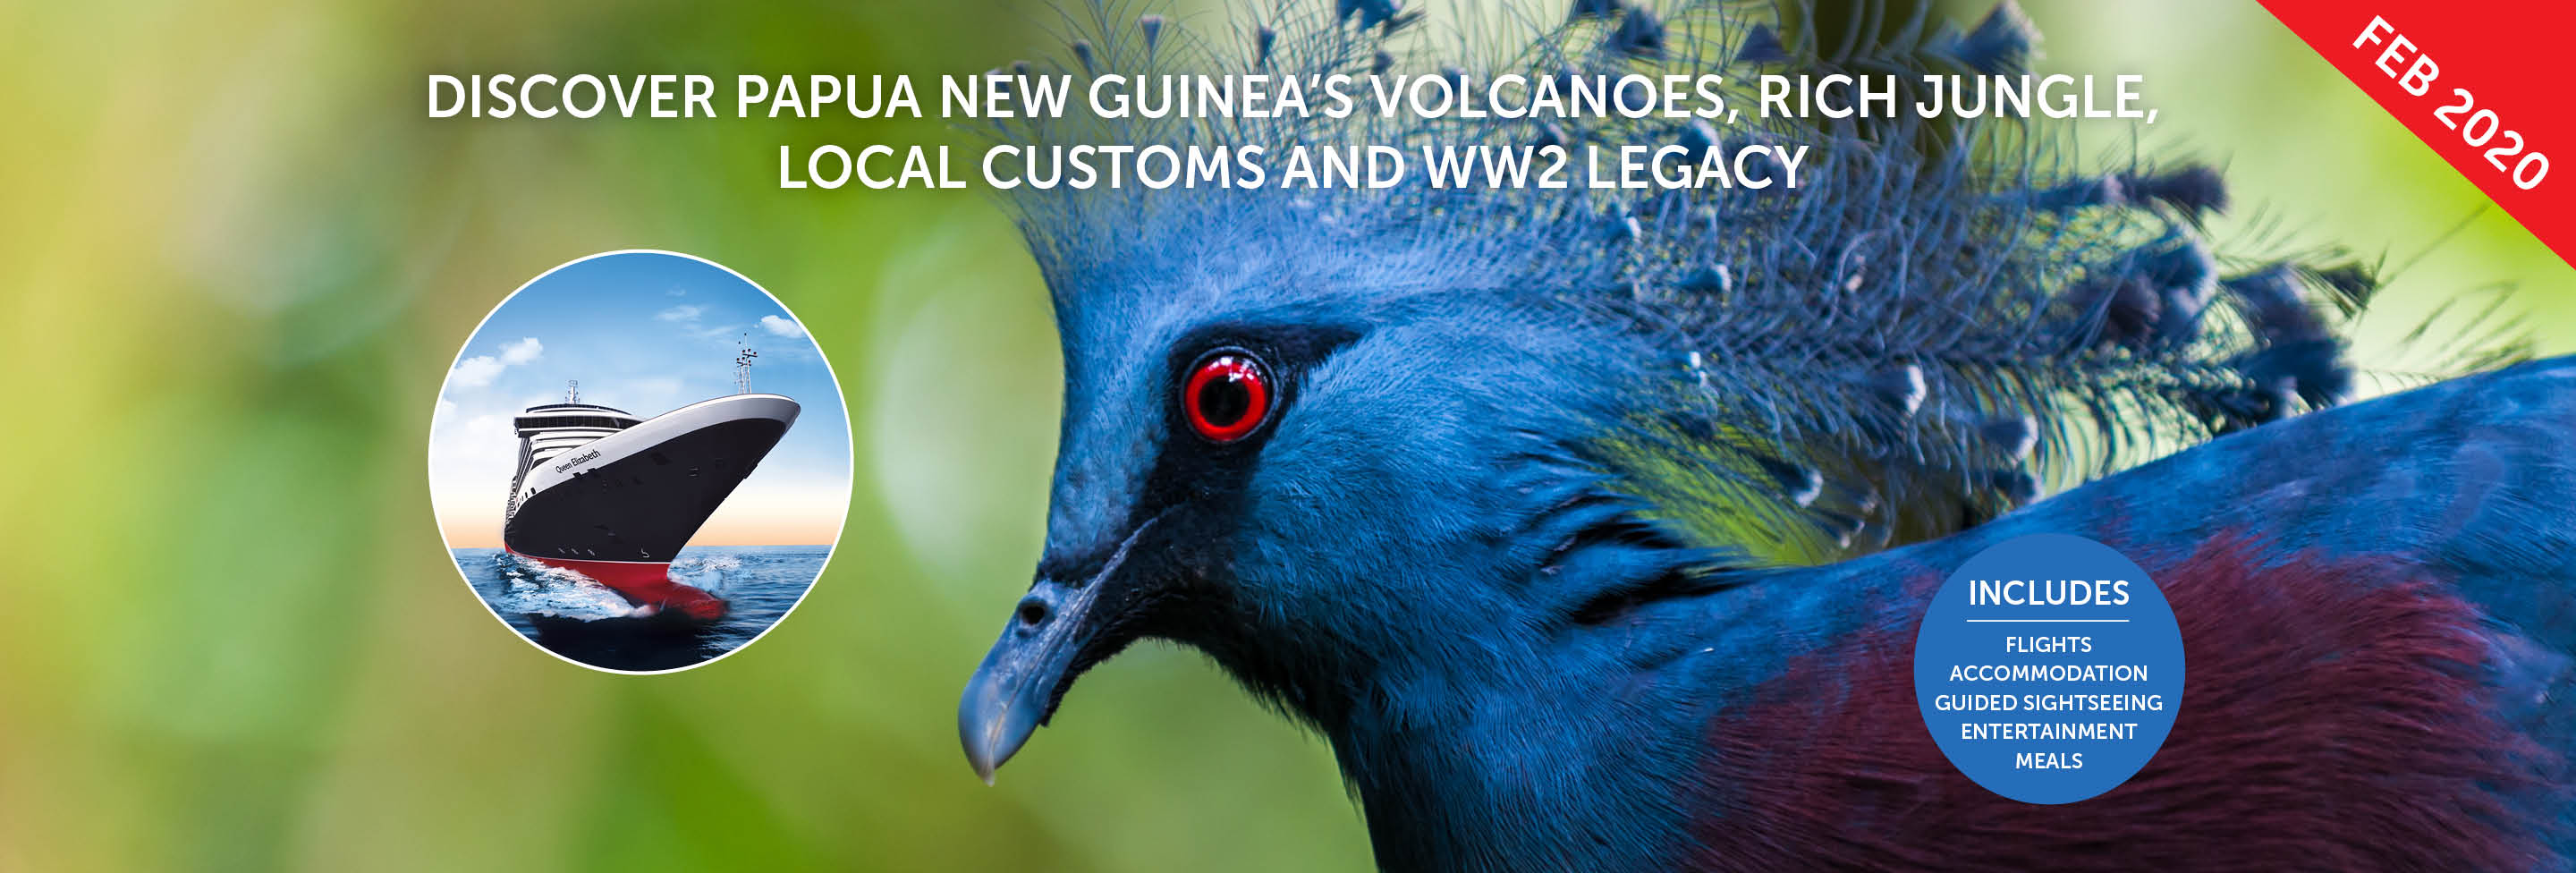 papua-new-guinea-feb-2020-1.jpg